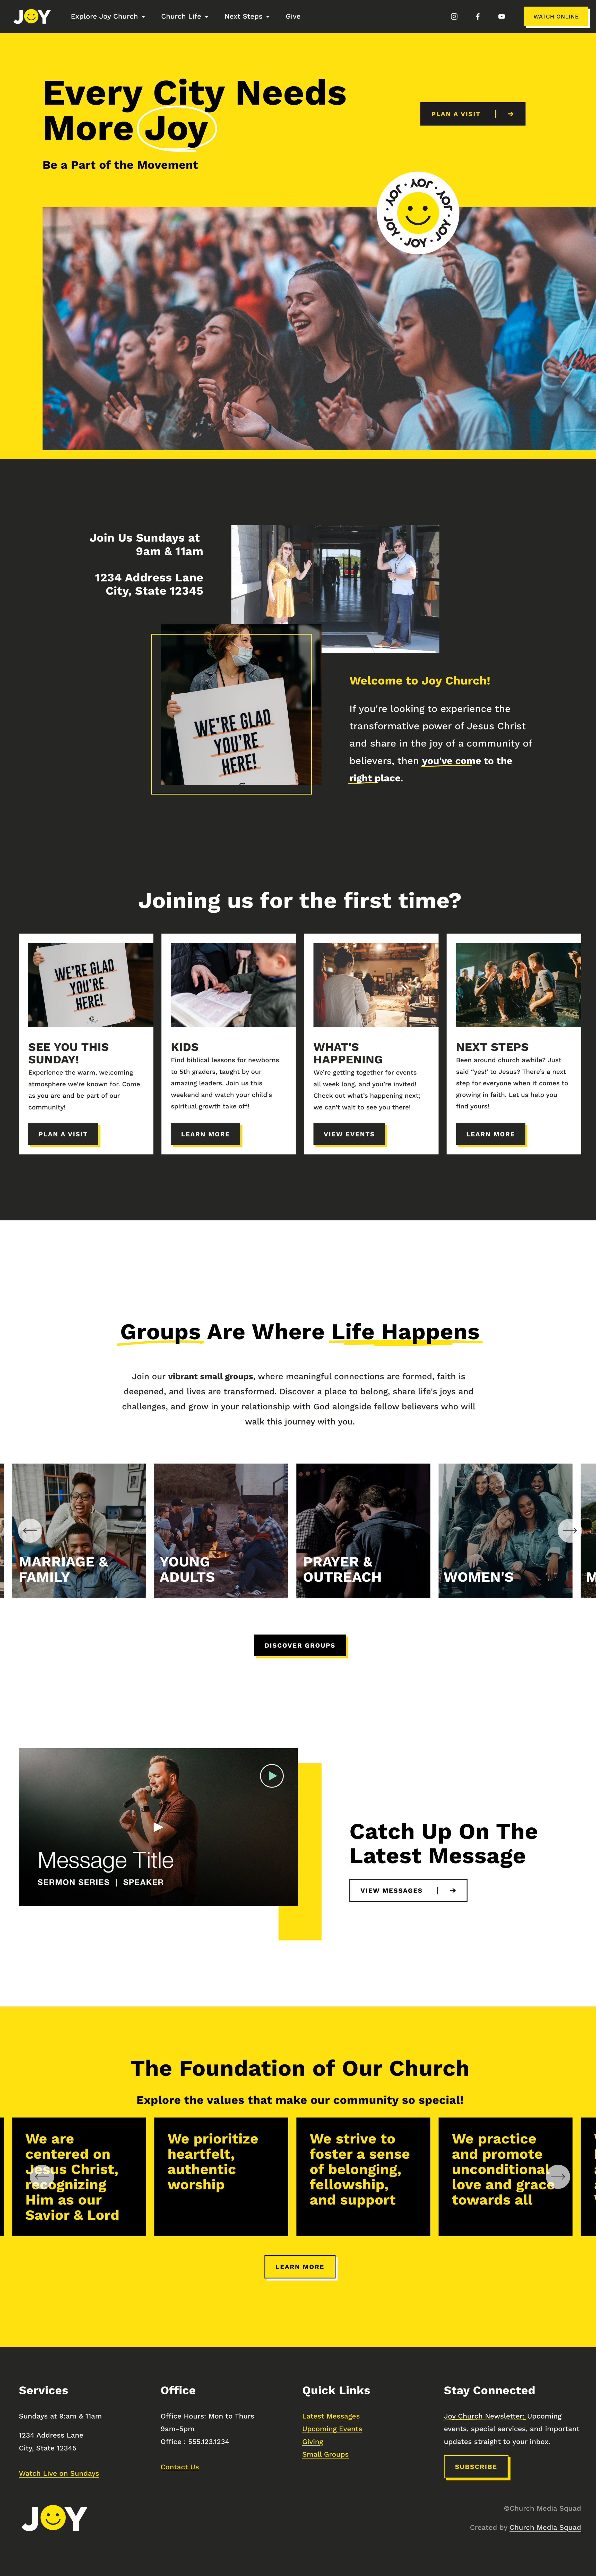 Church Media Squad - Website Redesign Portfolio - SocialSermons